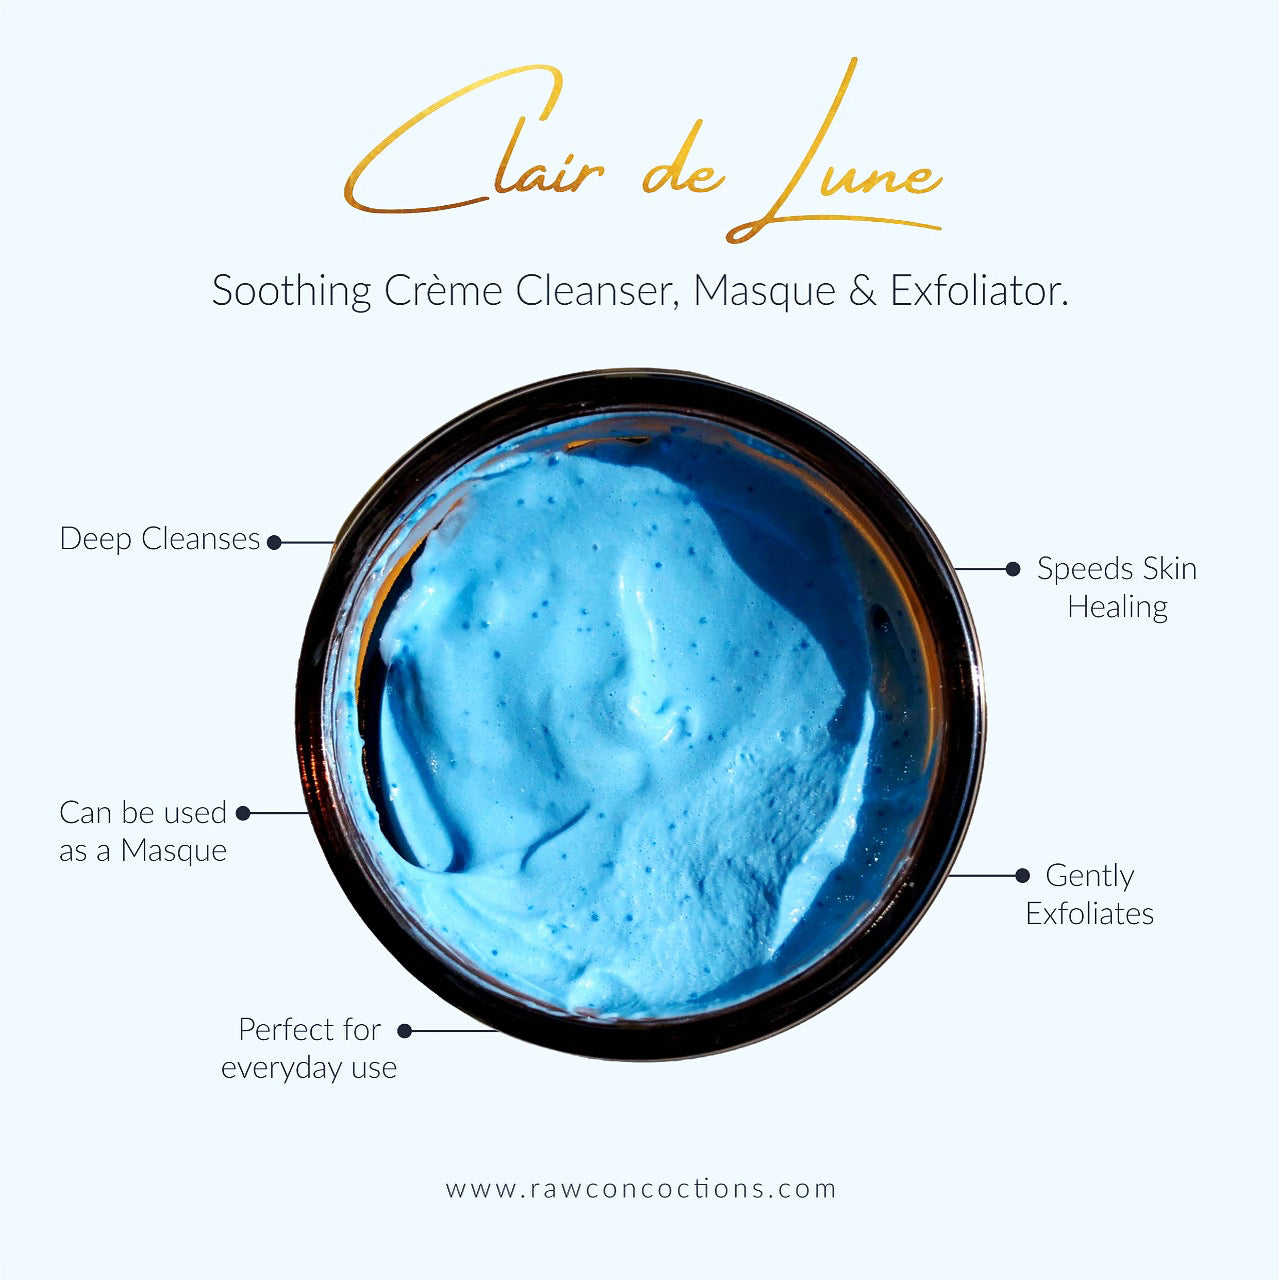 CLAIR DE LUNE - 3 in 1 Crème cleanser, Masque & Exfoliator - Raw Concoctions